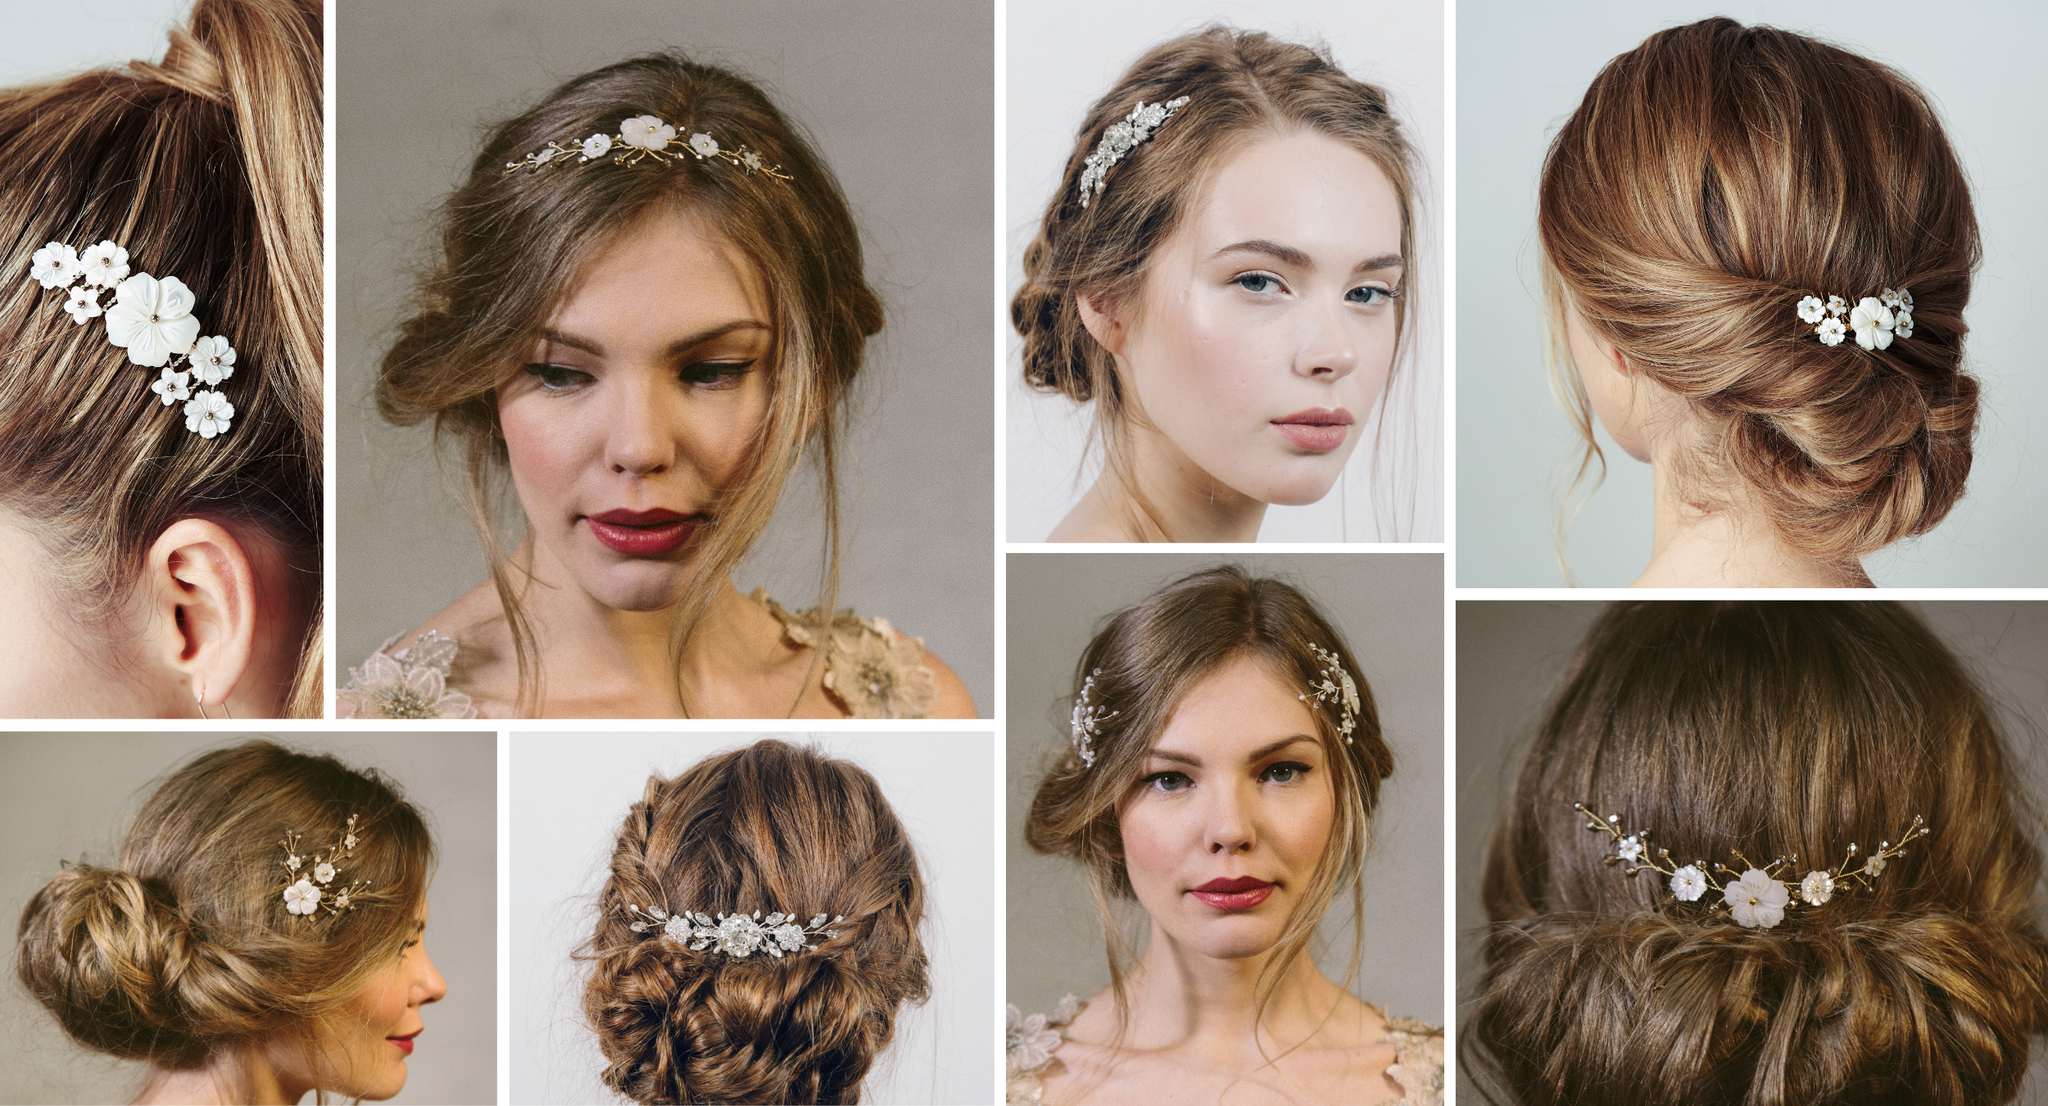 botanical wedding hair accessories - combs